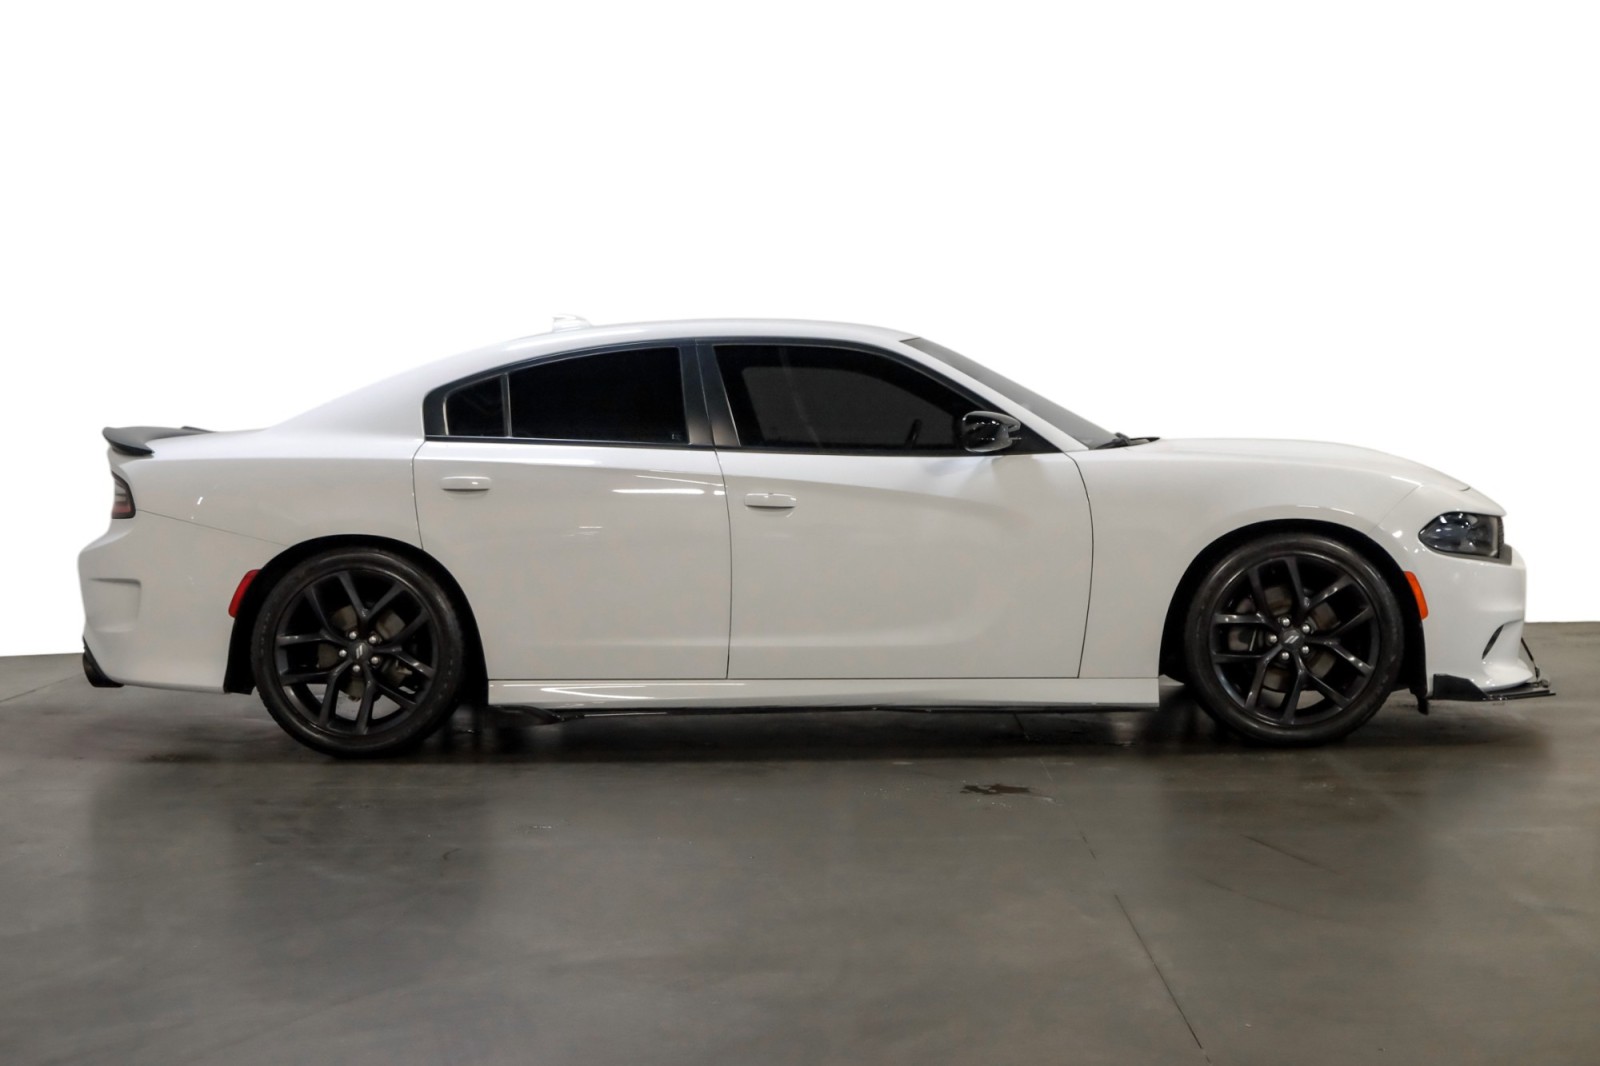 2020 Dodge Charger GT CustomLeather BlackTopPkg RESERVECUSTOM CstmSus 4